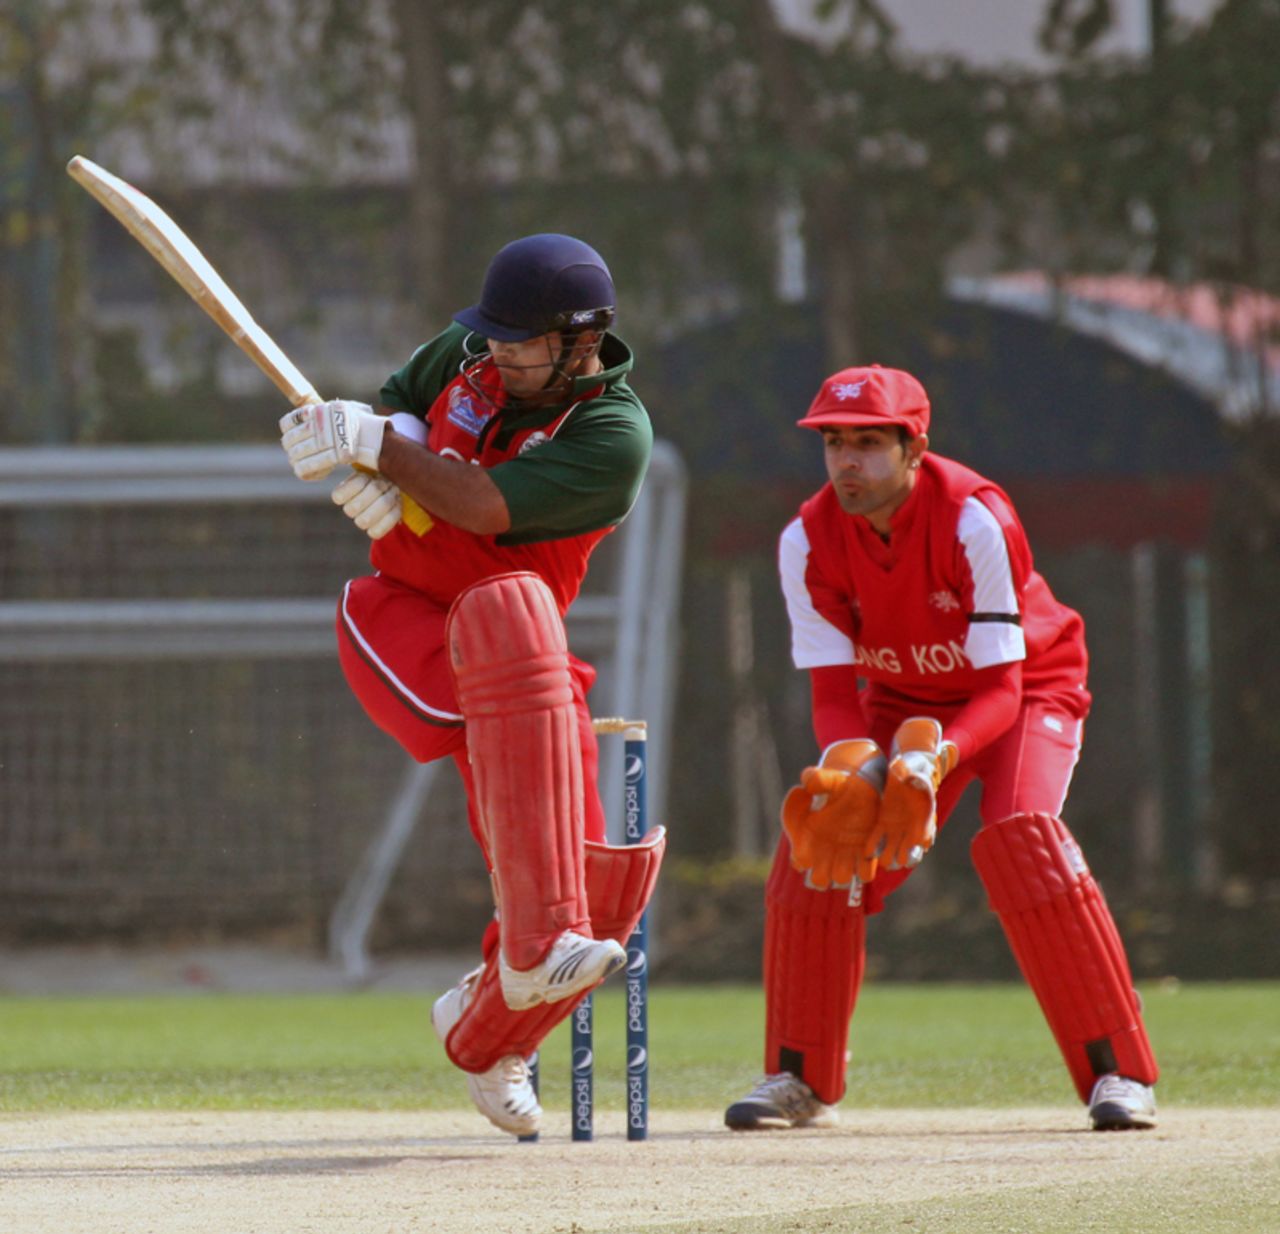 Oman's Vaibhav Wategaonkar tucks the ball towards the leg side against Hong Kong during their ICC WCL Division 3 clash at Kowloon Cricket Club on 23rd January 2011